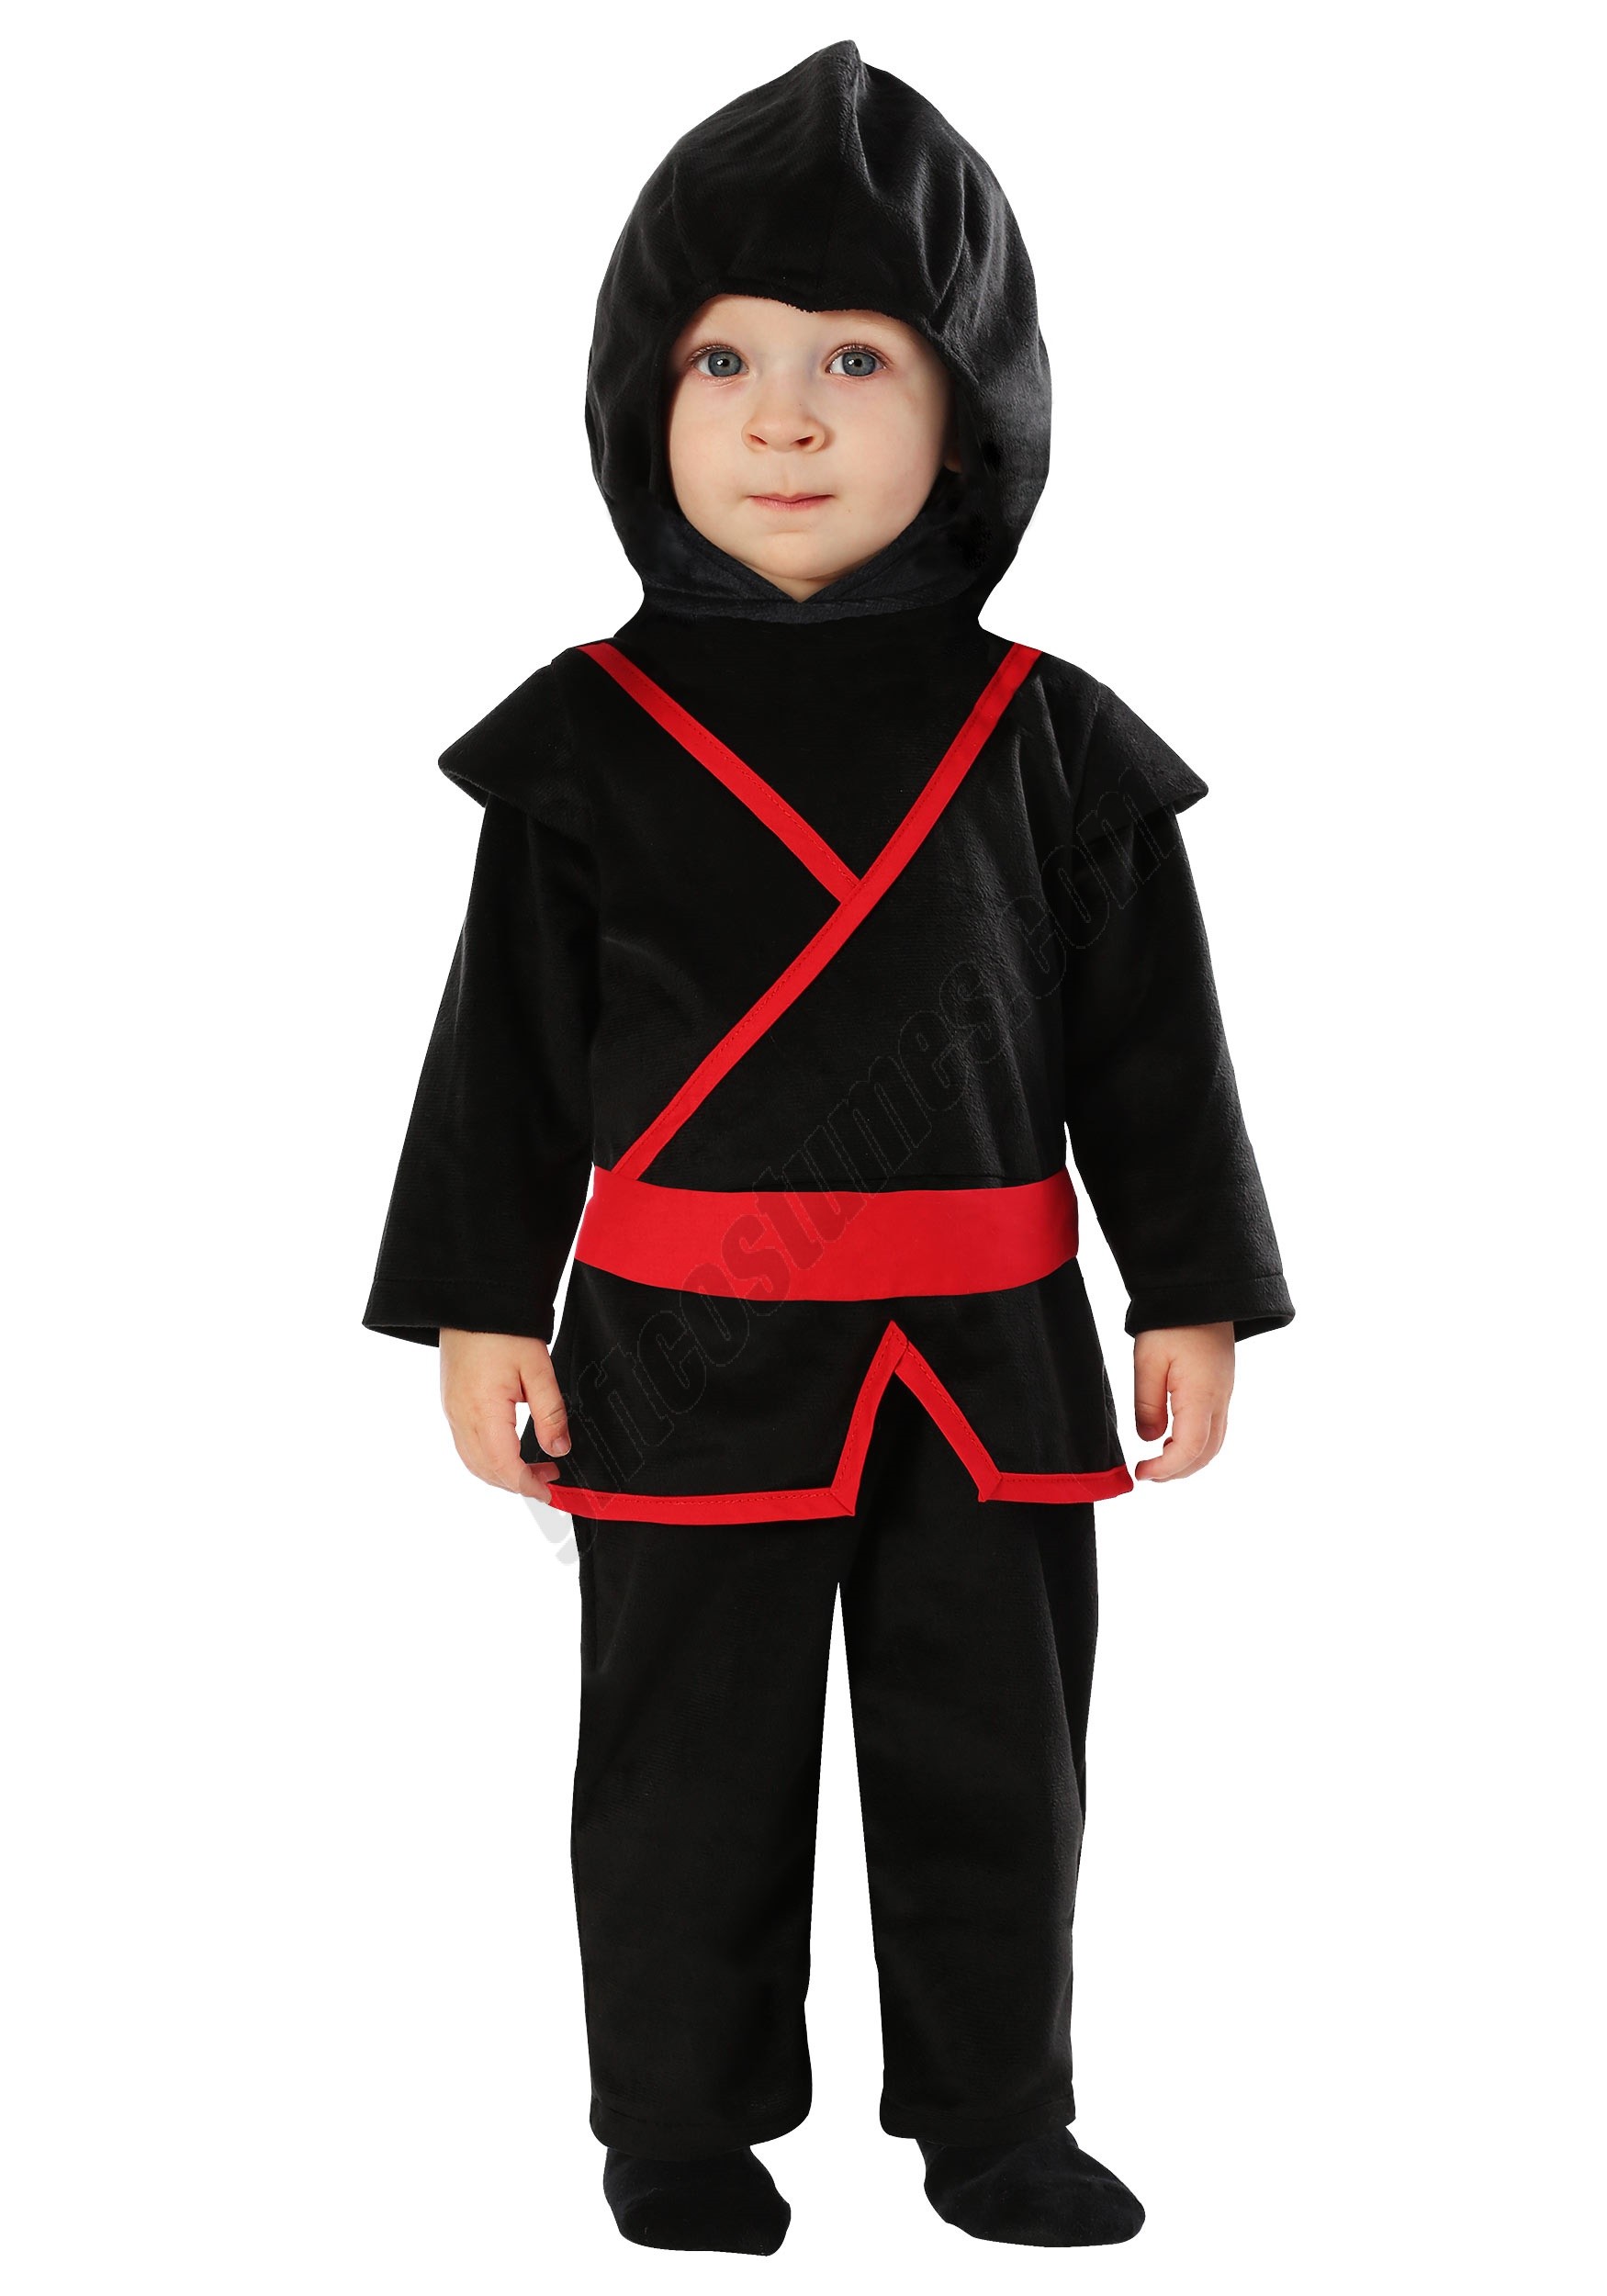 Ninja Infant Costume Promotions - Ninja Infant Costume Promotions